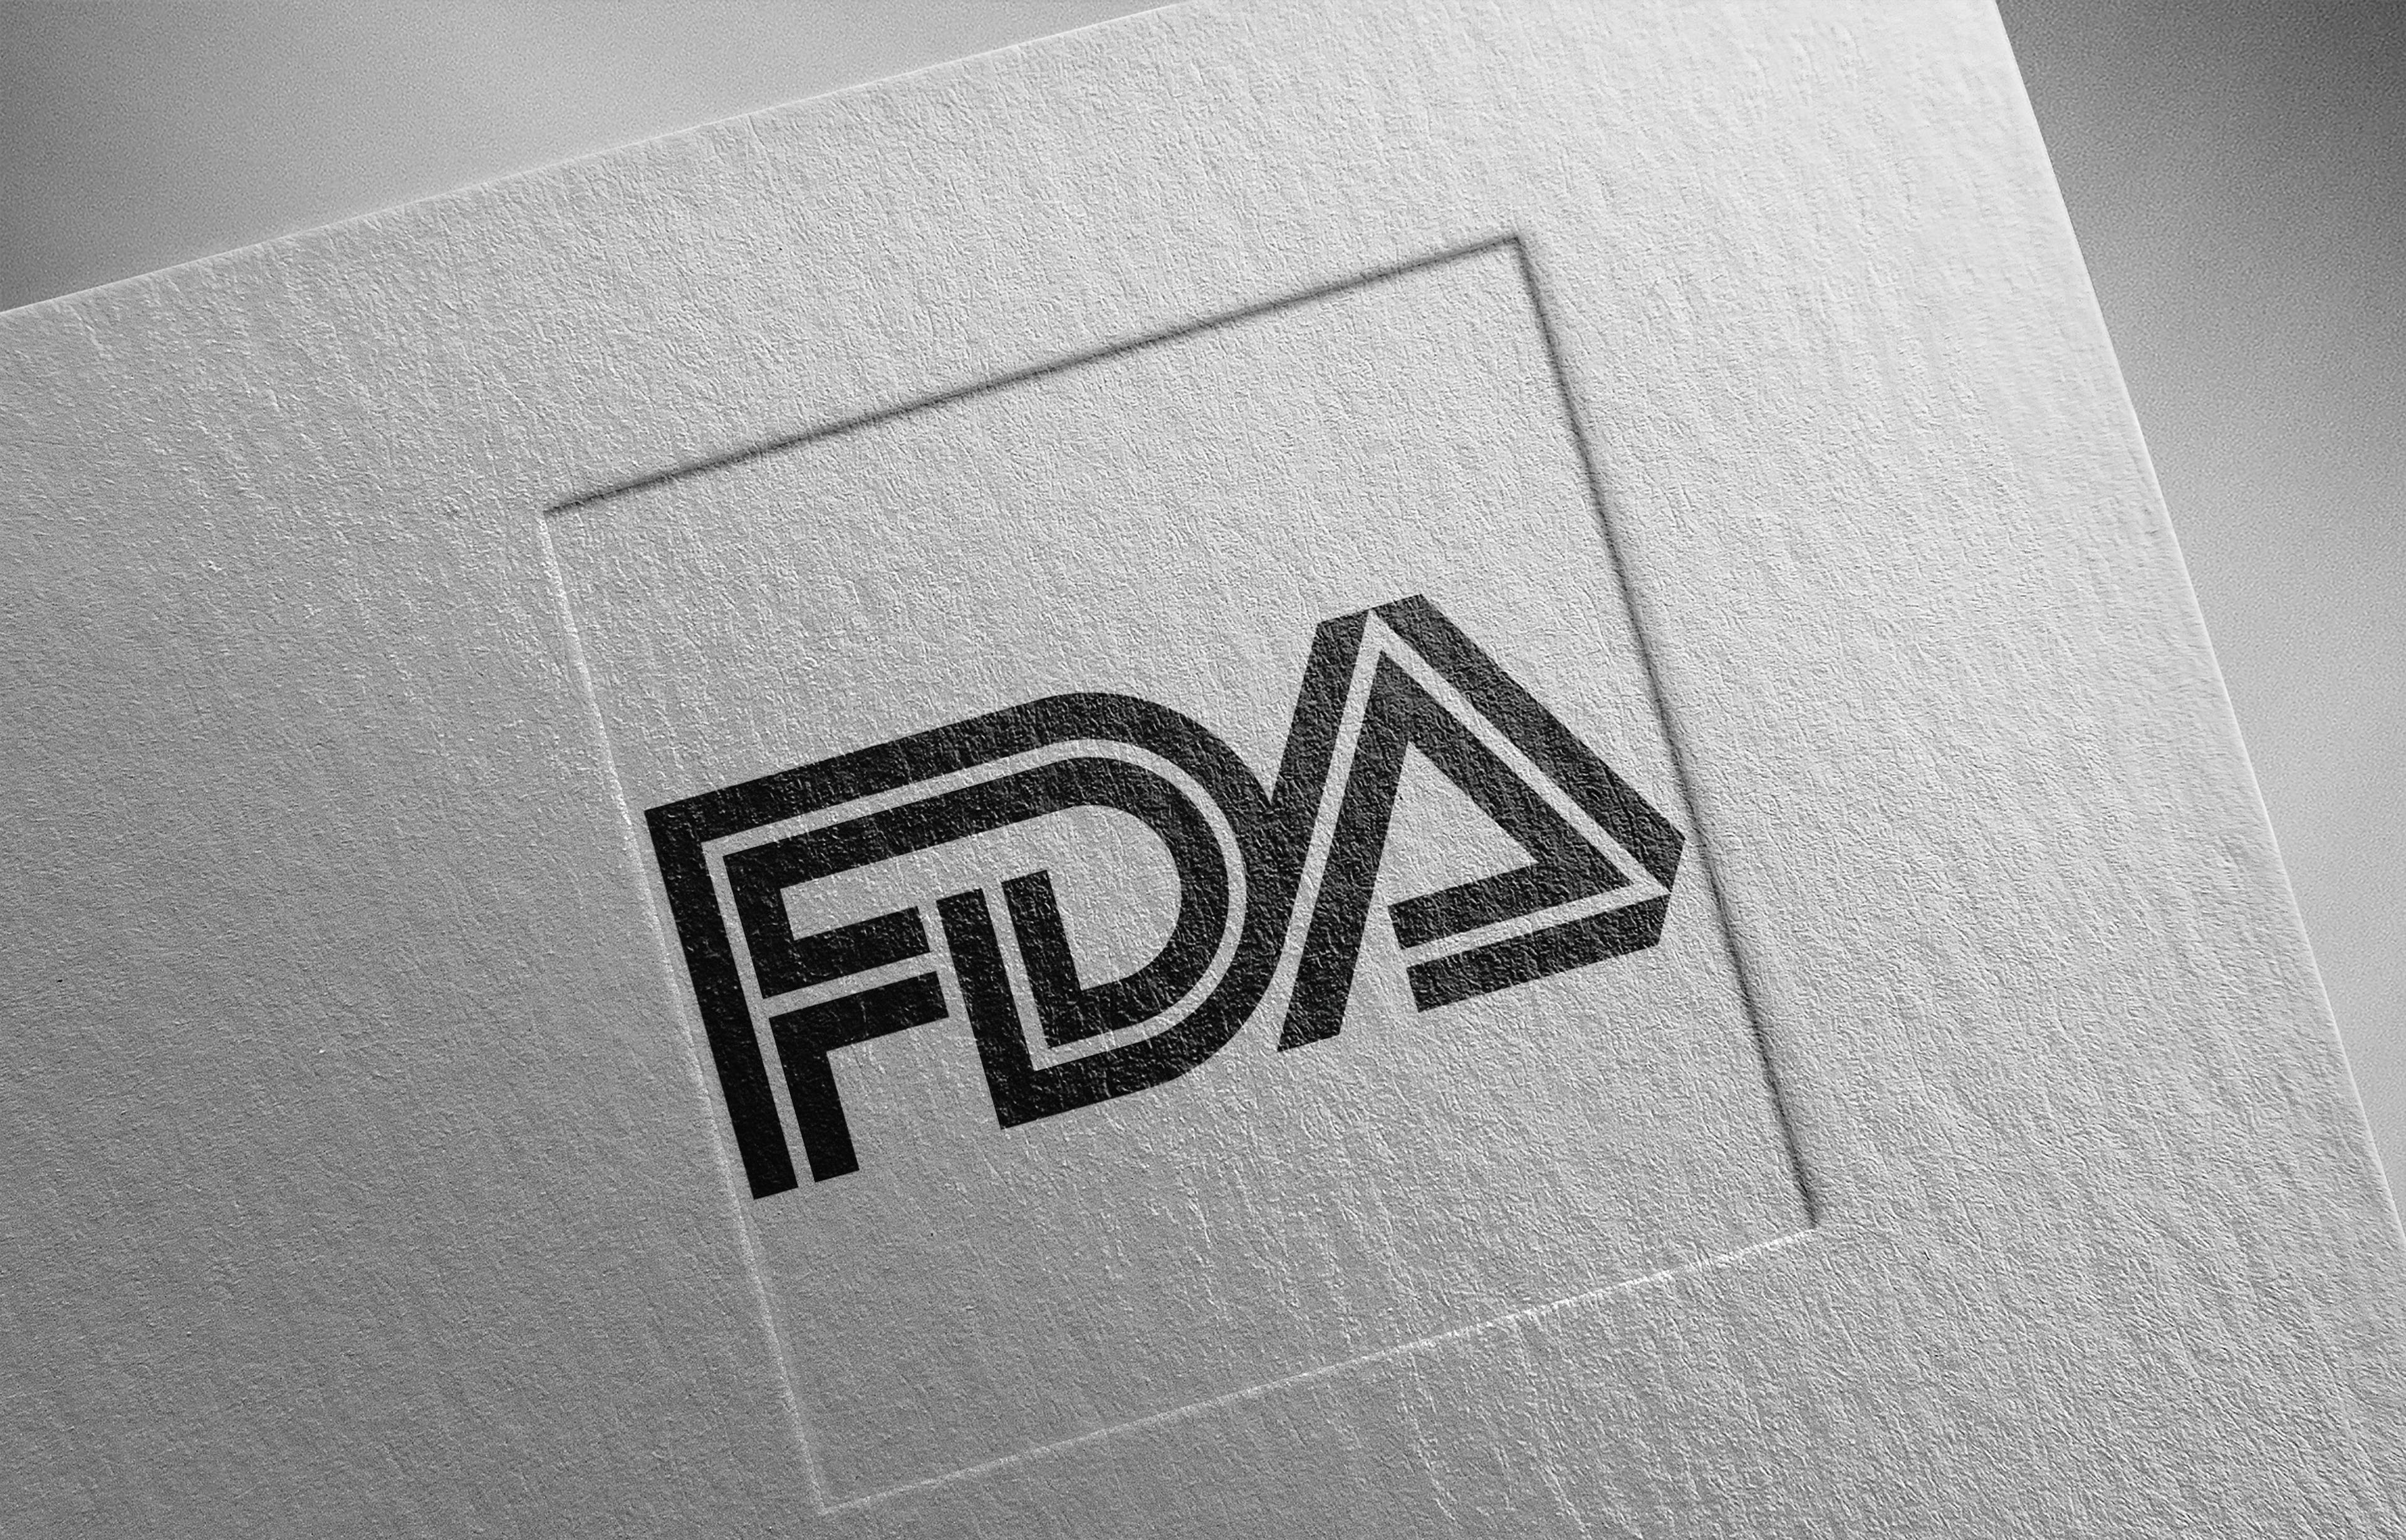 "FDA" on textured paper